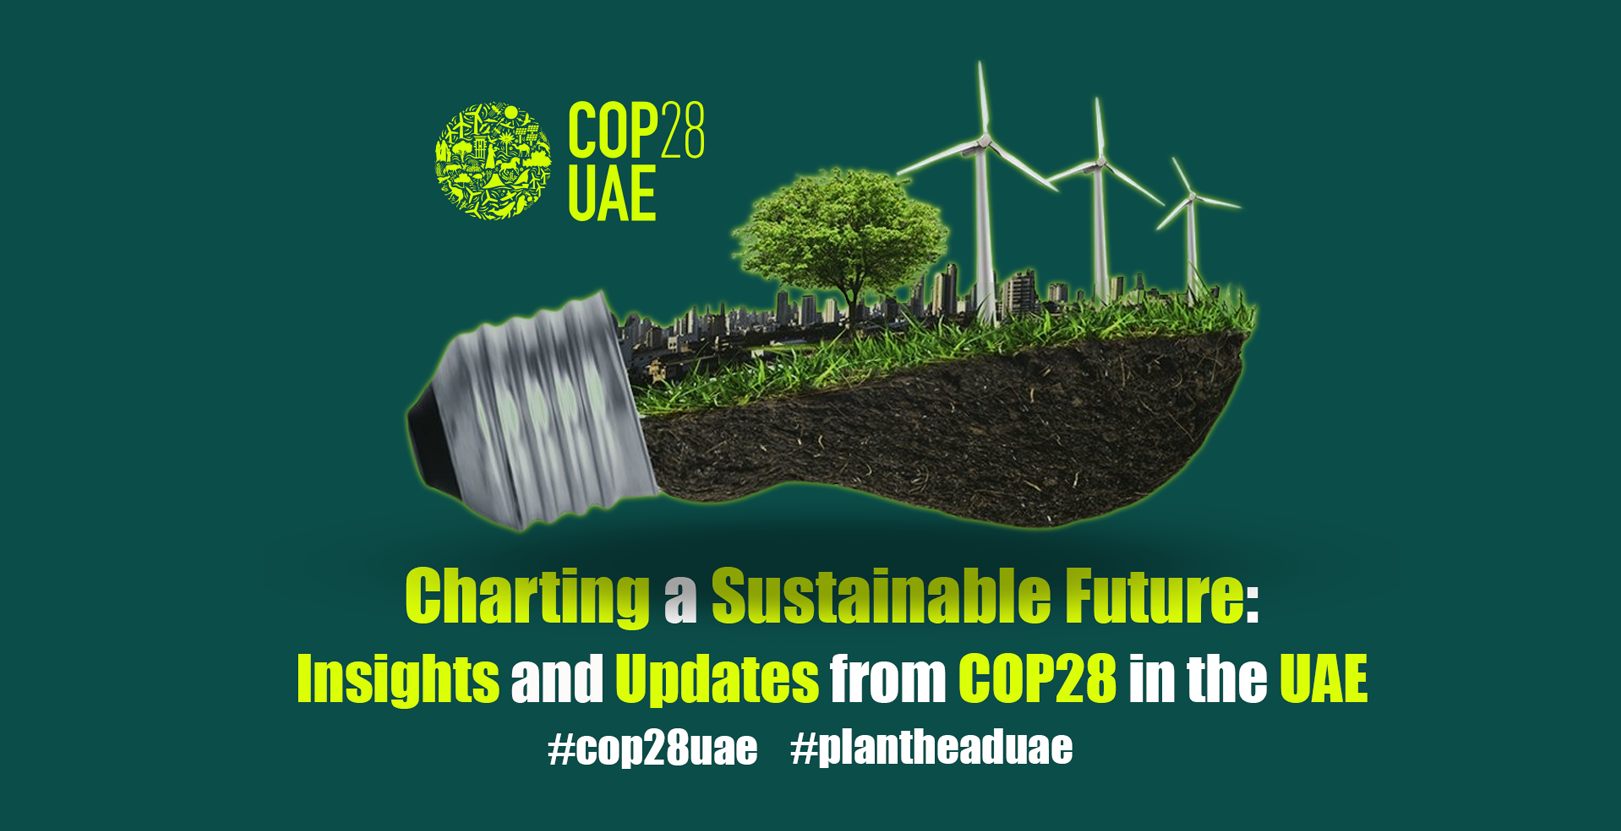 cop28 uae | Planthead UAE | sustainability | Climate Change Conference